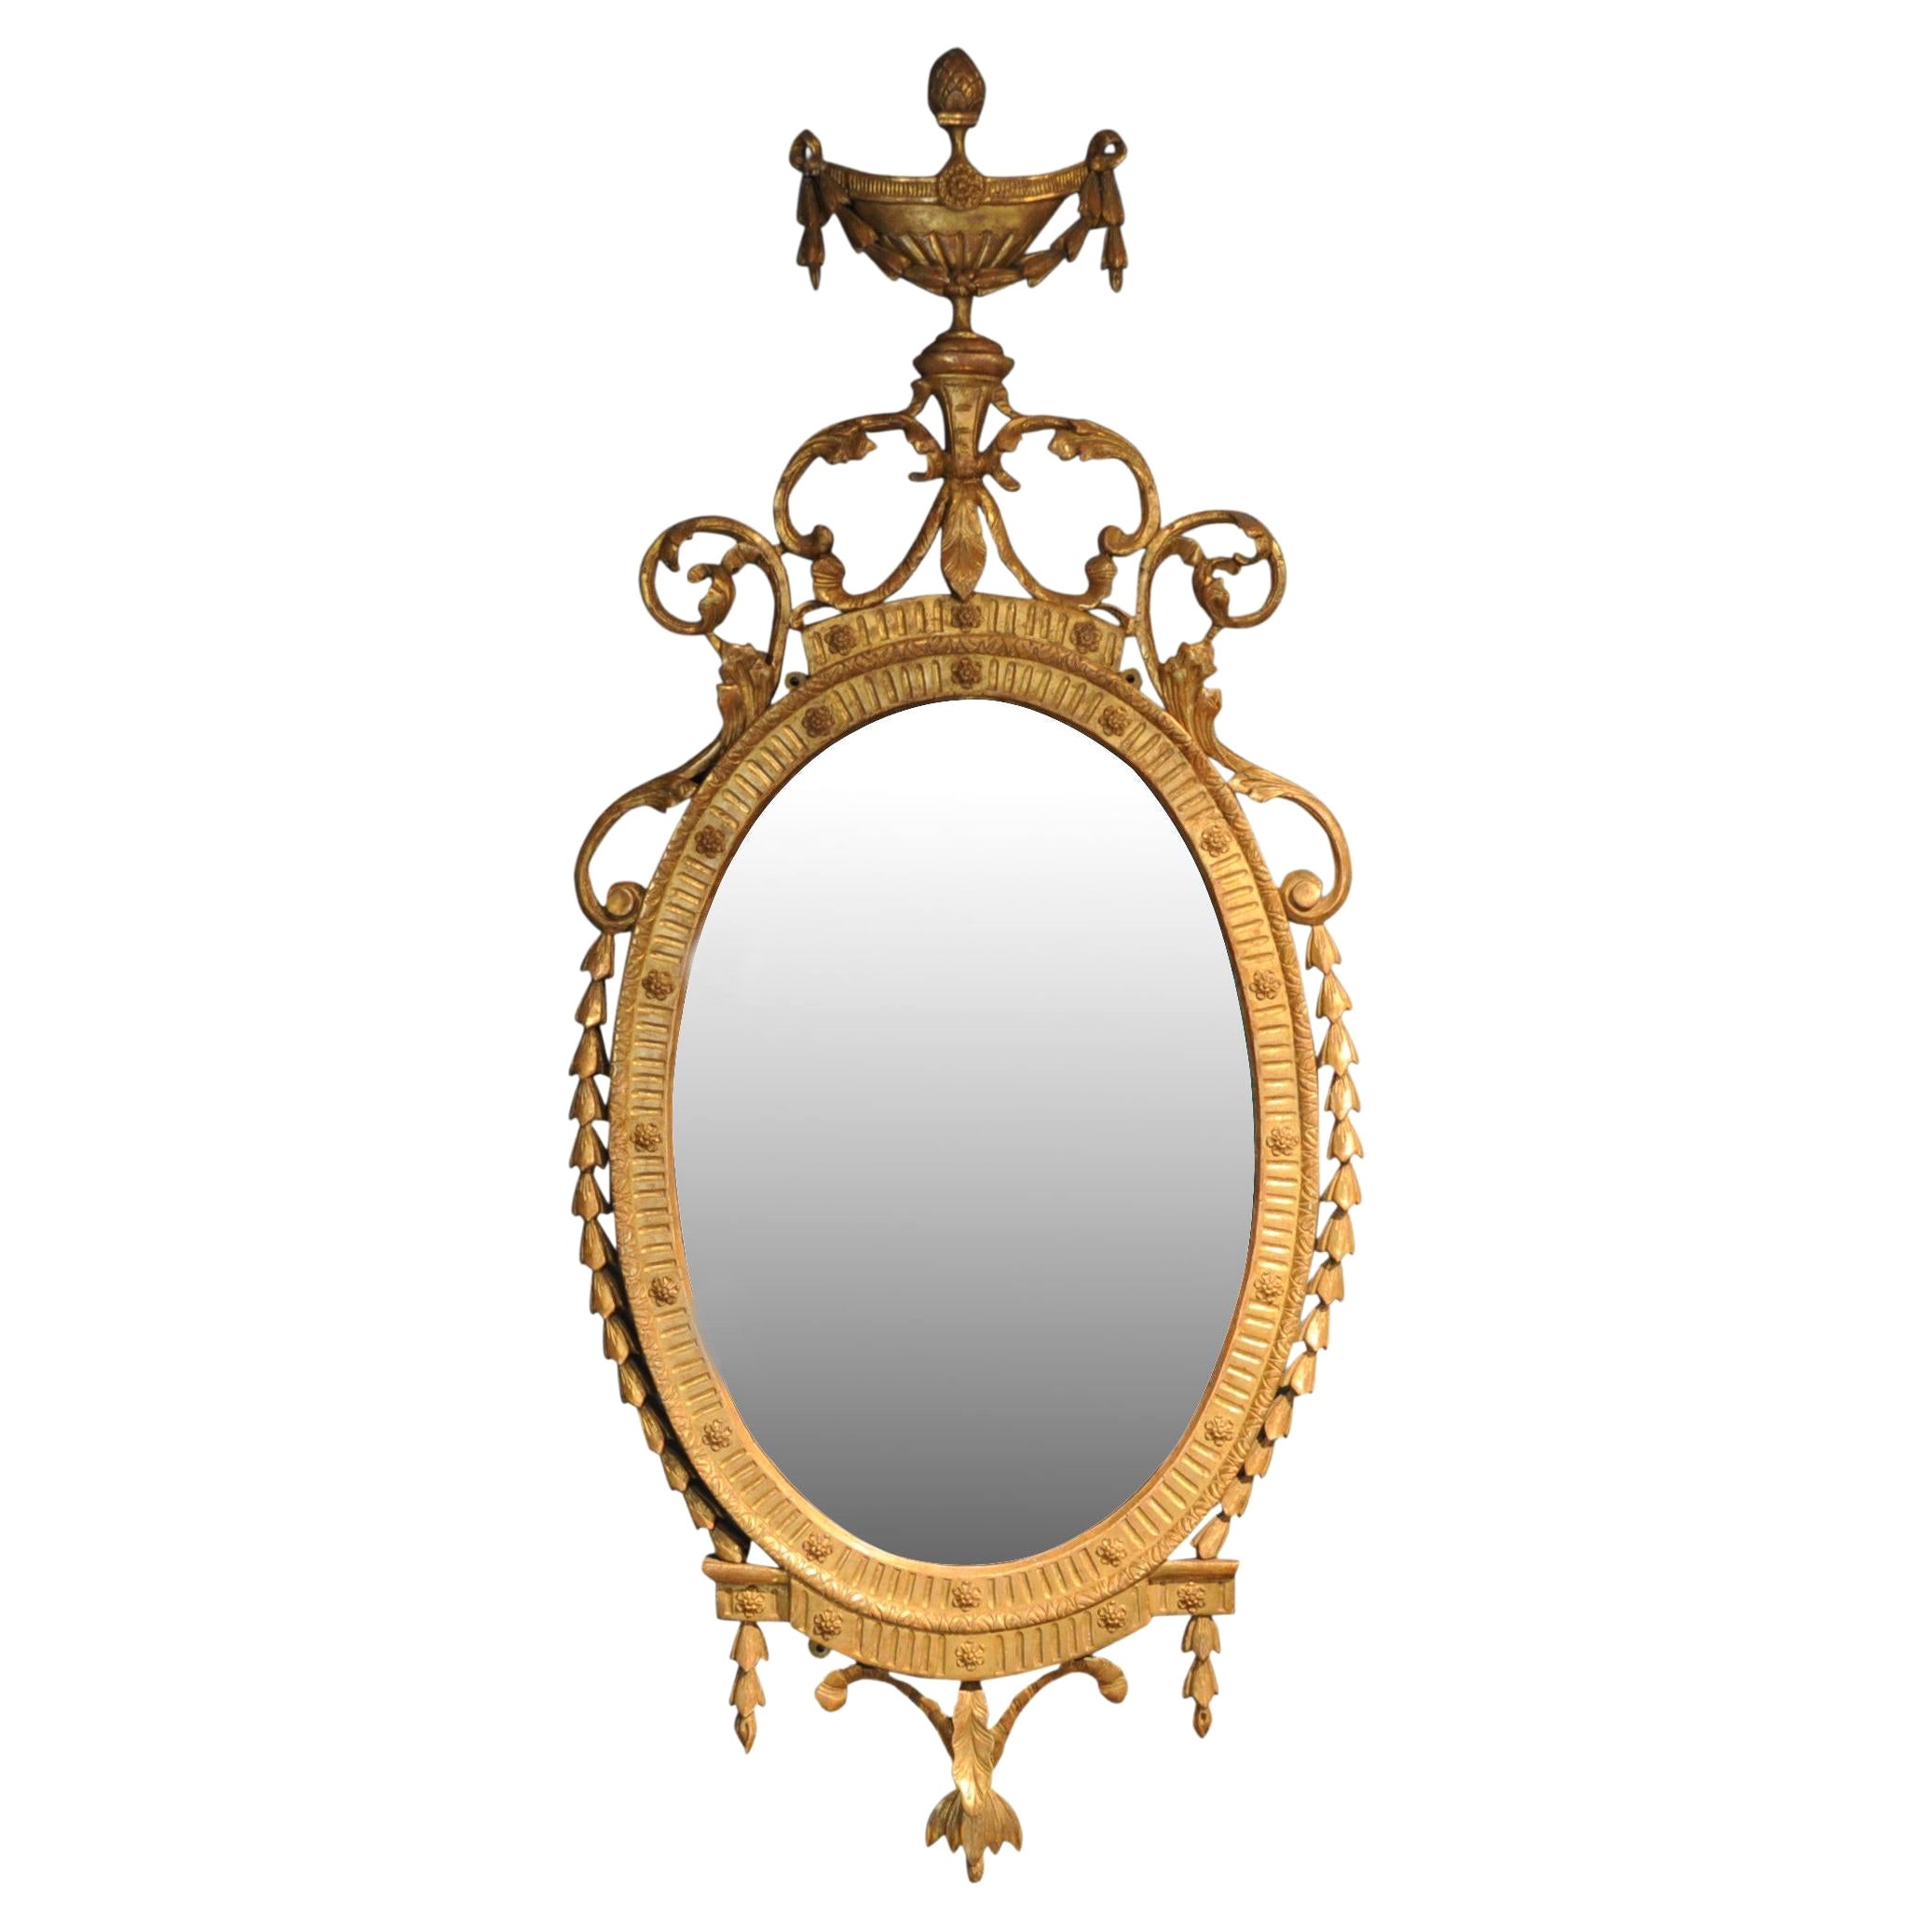 Late 18th century oval gilt mirror